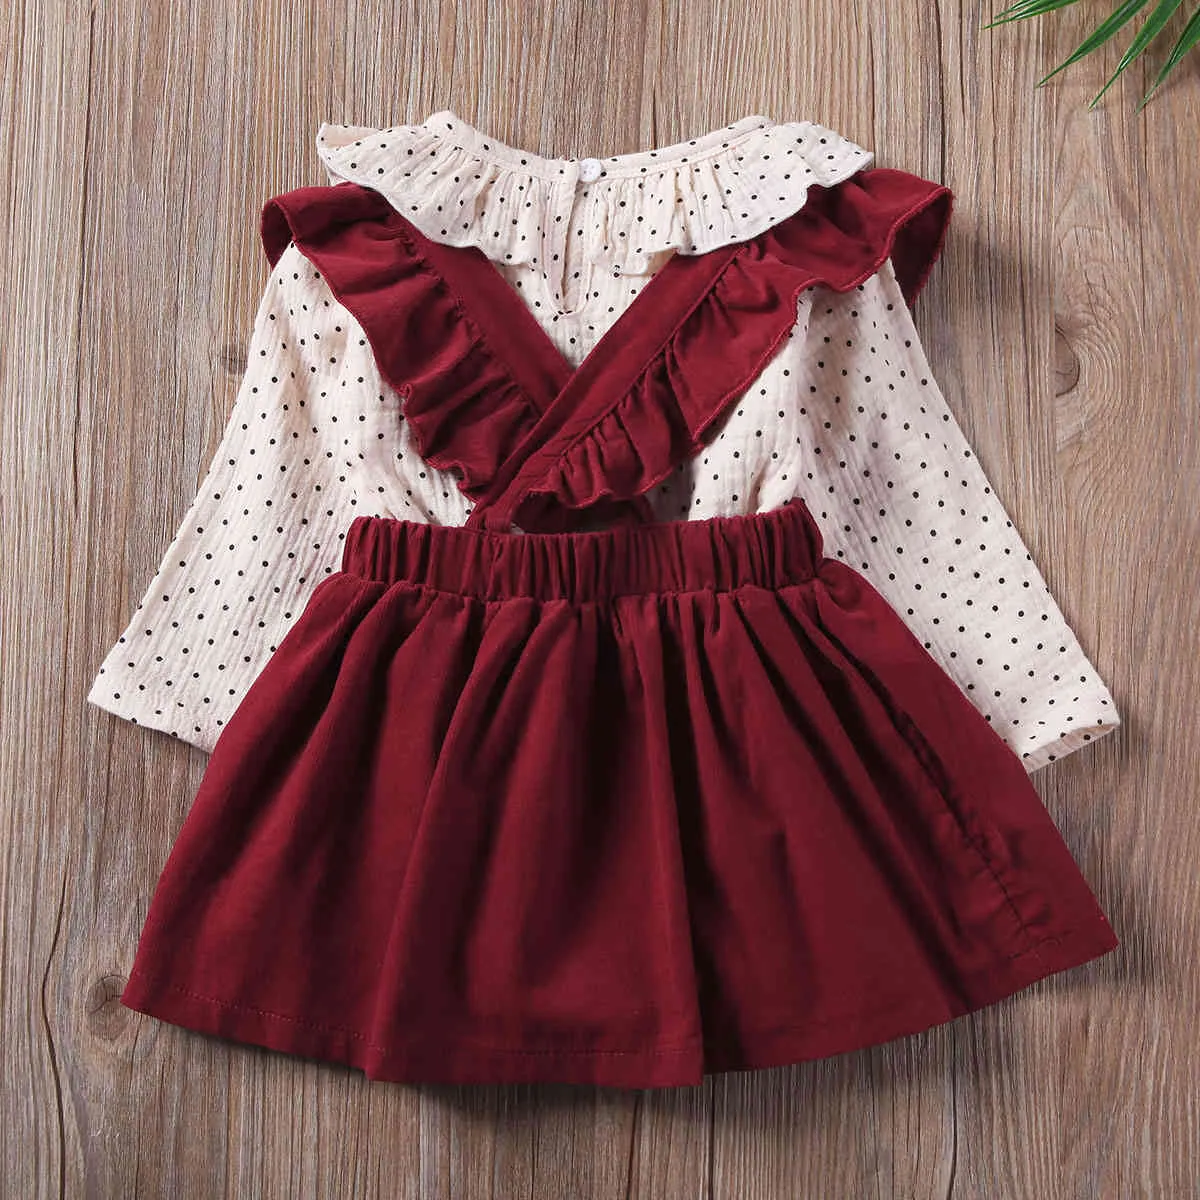 3-24M生まれた幼児の赤ちゃんの女の子の服セット秋の春のドットのフリルロンパースソリッドスカートオーバーオール幼児の衣装210515